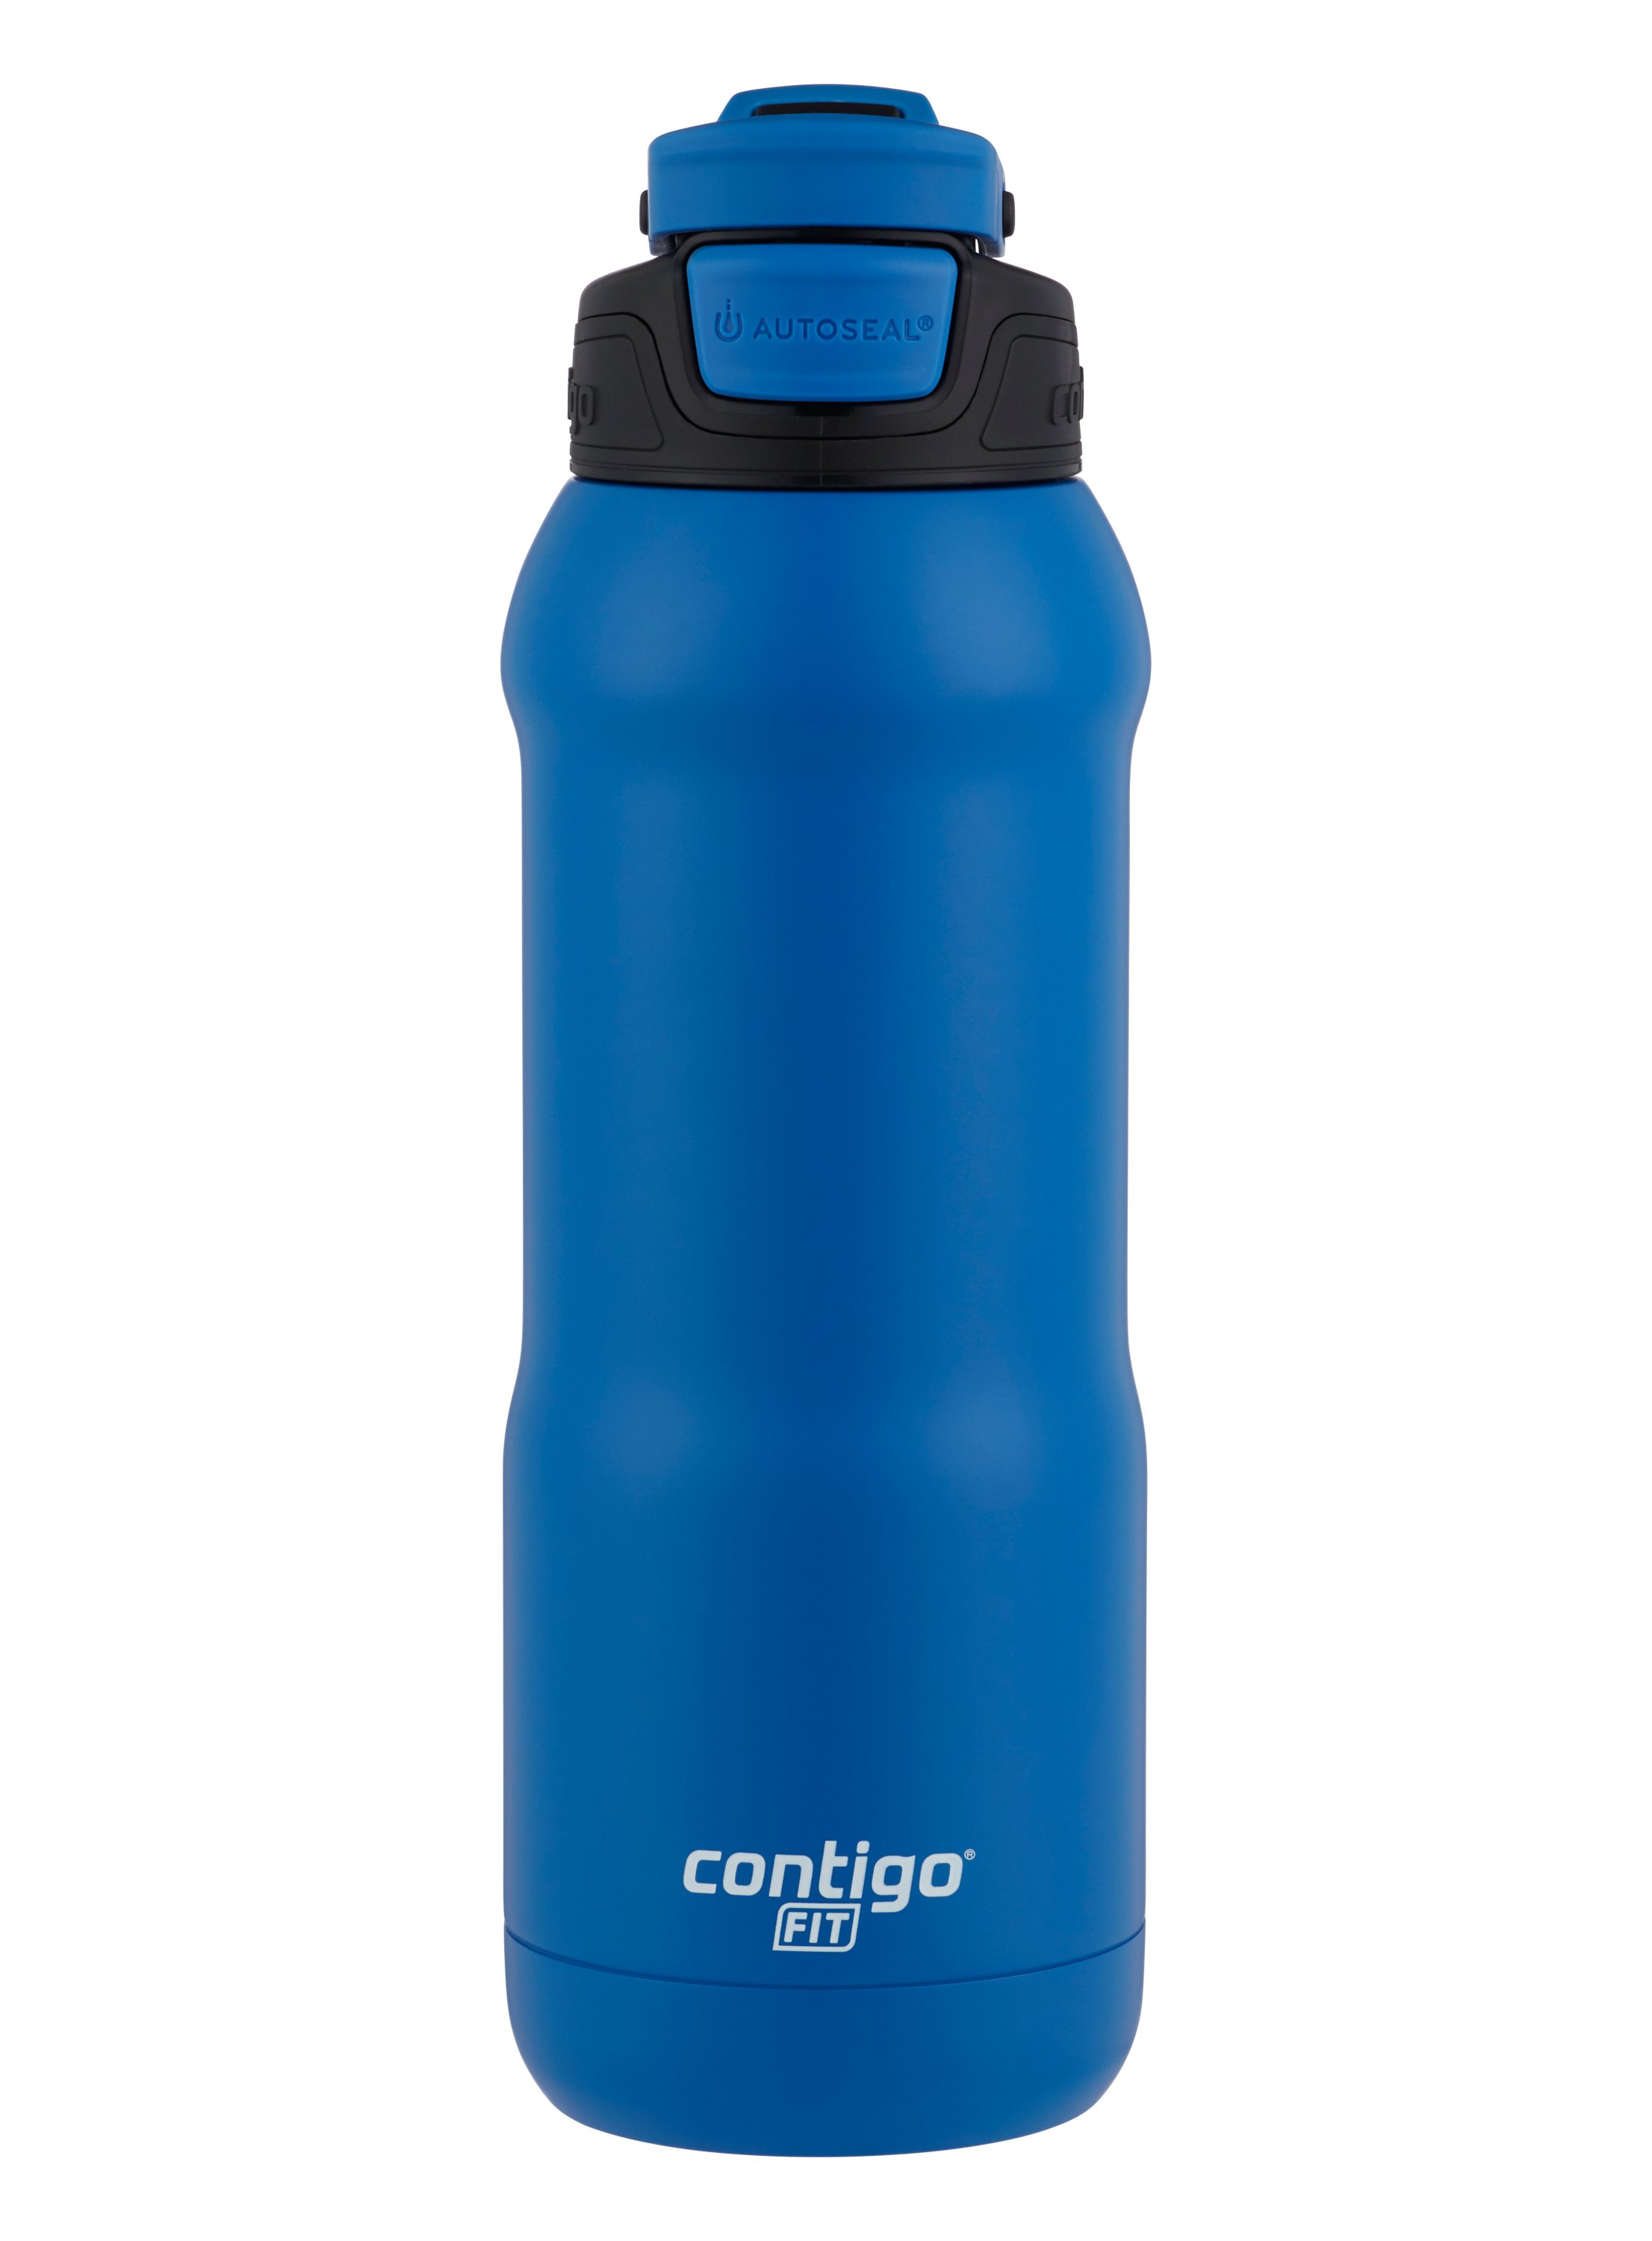 32oz Water Bottle, Dual Temperature Beverage Bottle